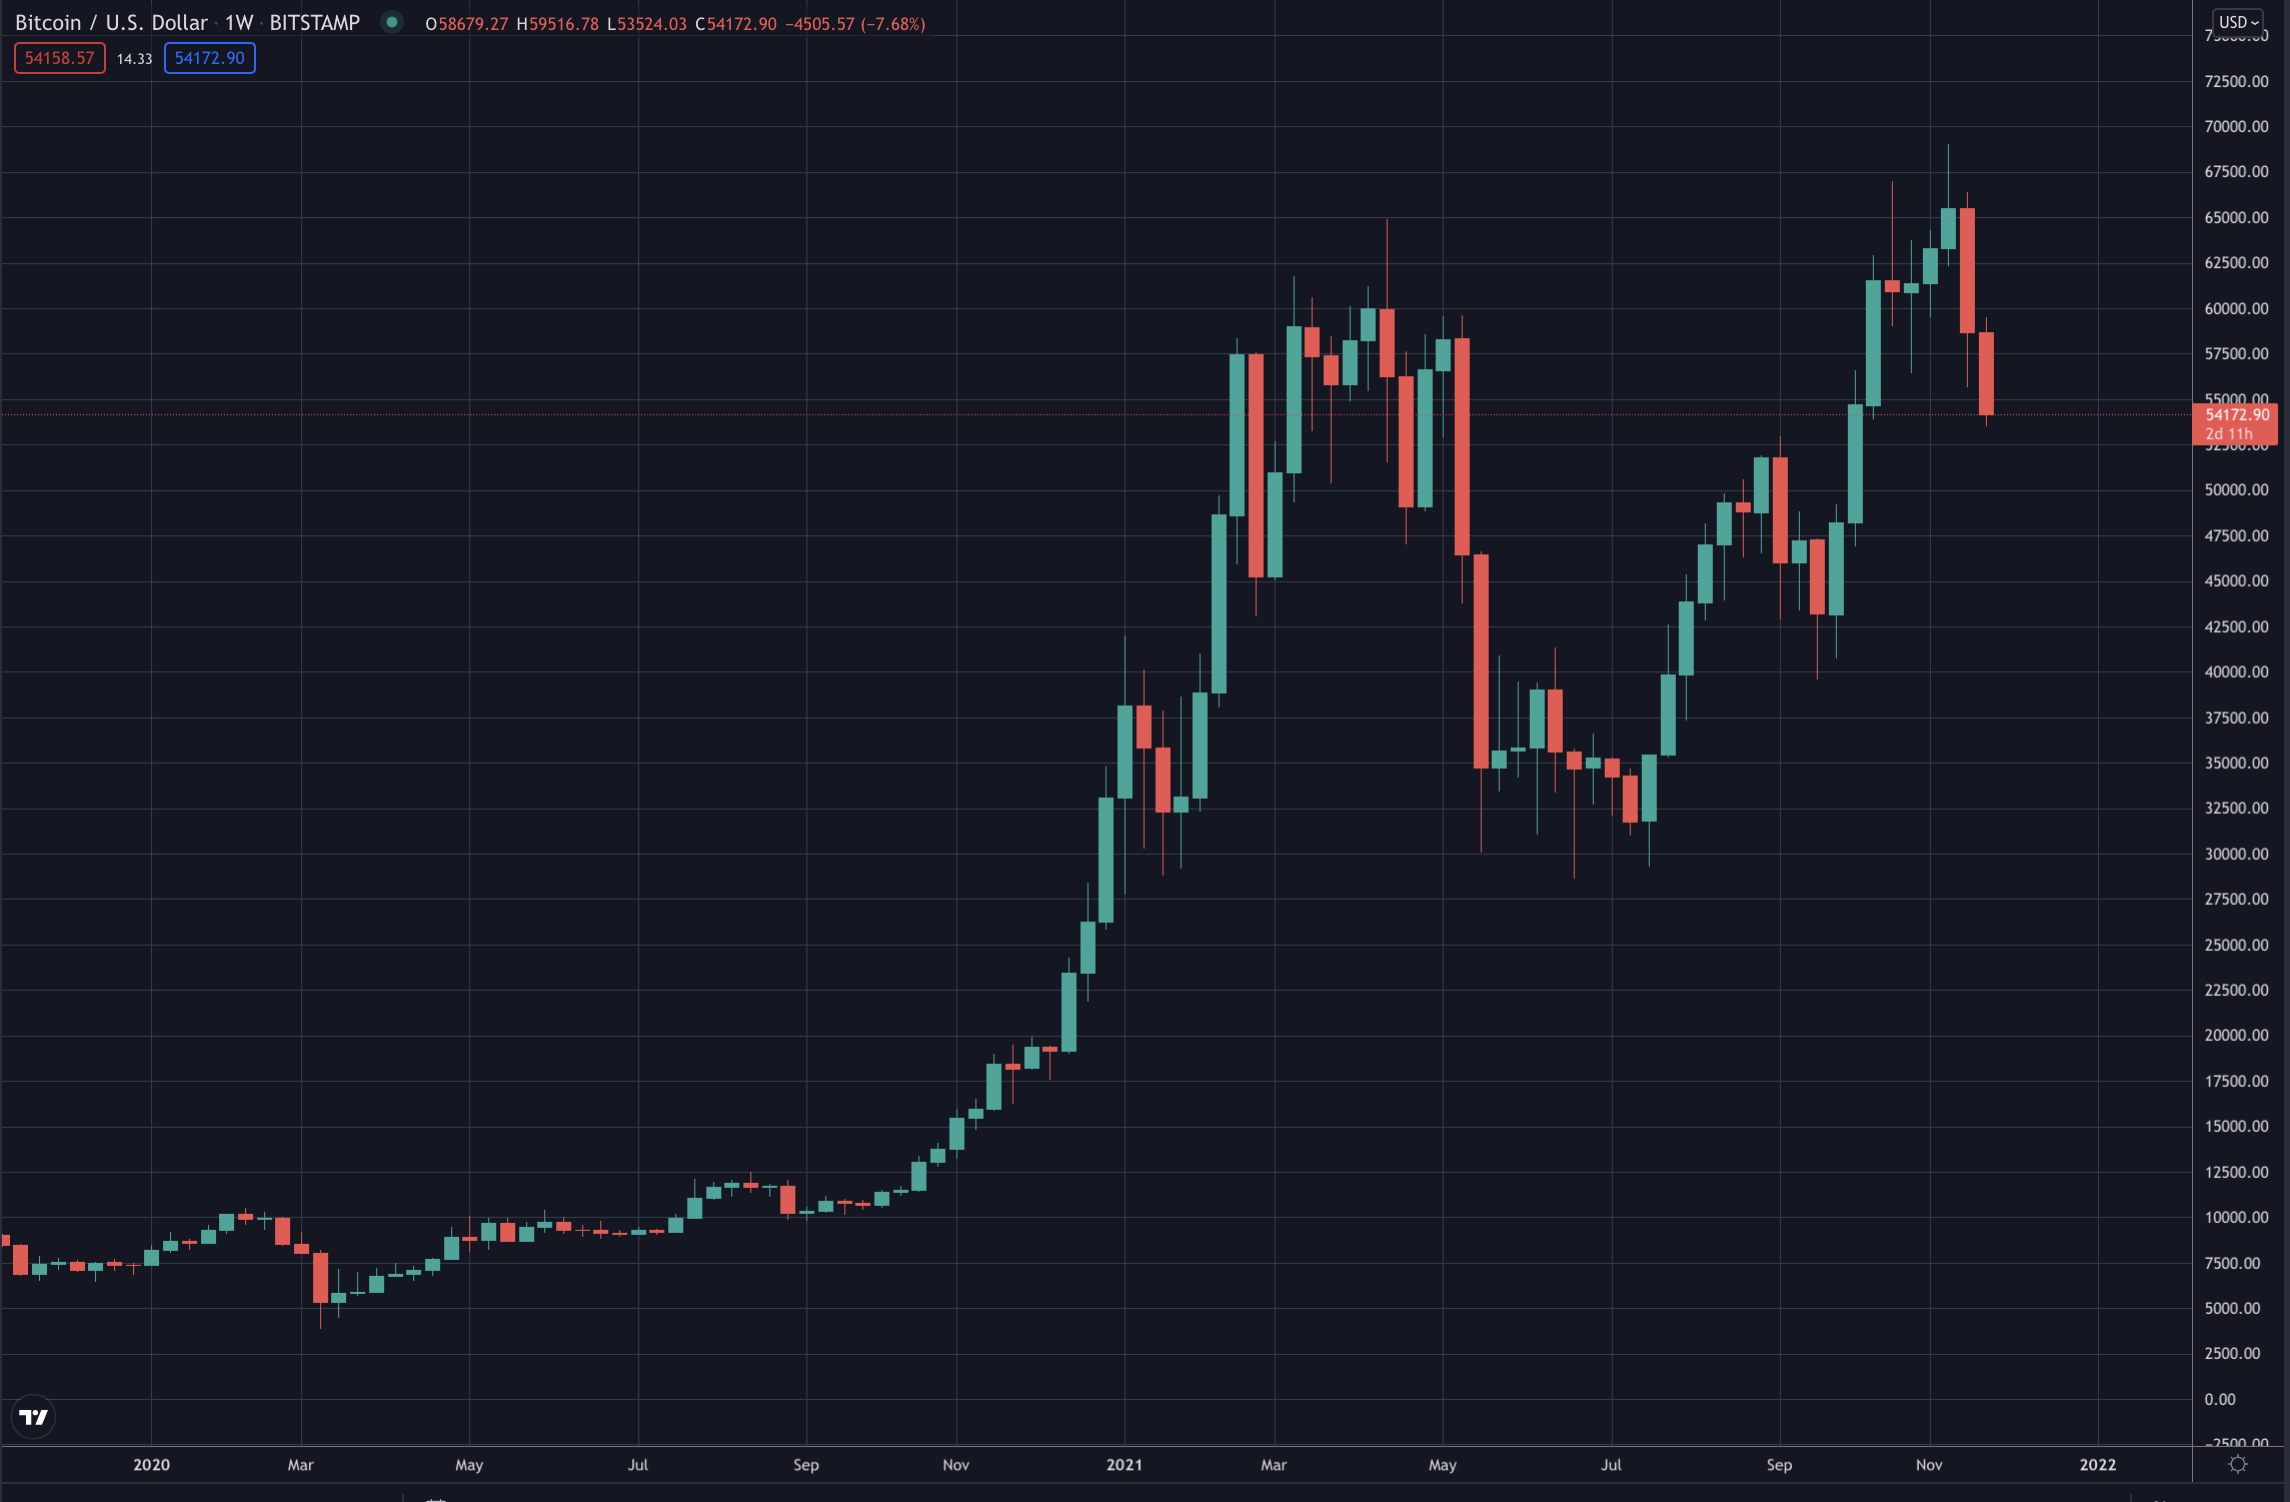 Bitcoin's price on weekly, Nov 2021